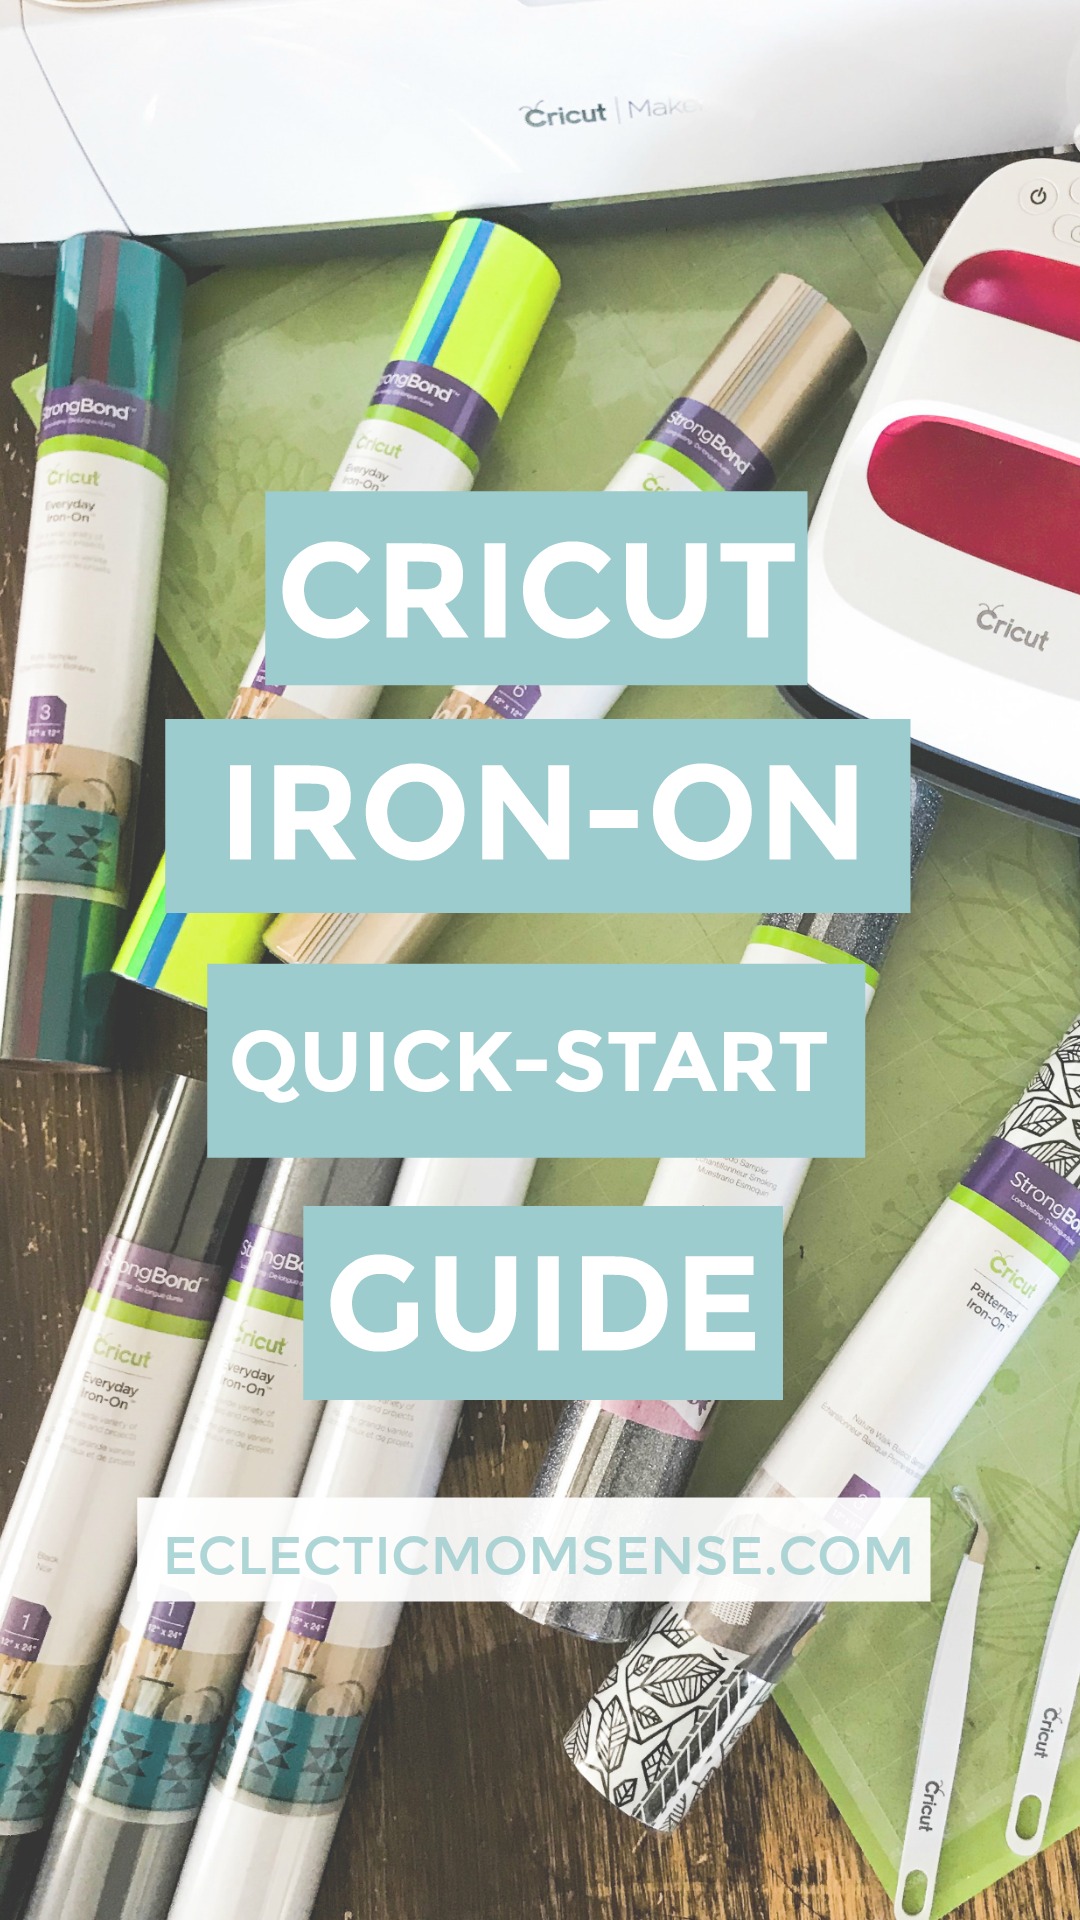 Cricut Iron-On Quick Start Guide - Eclectic Momsense